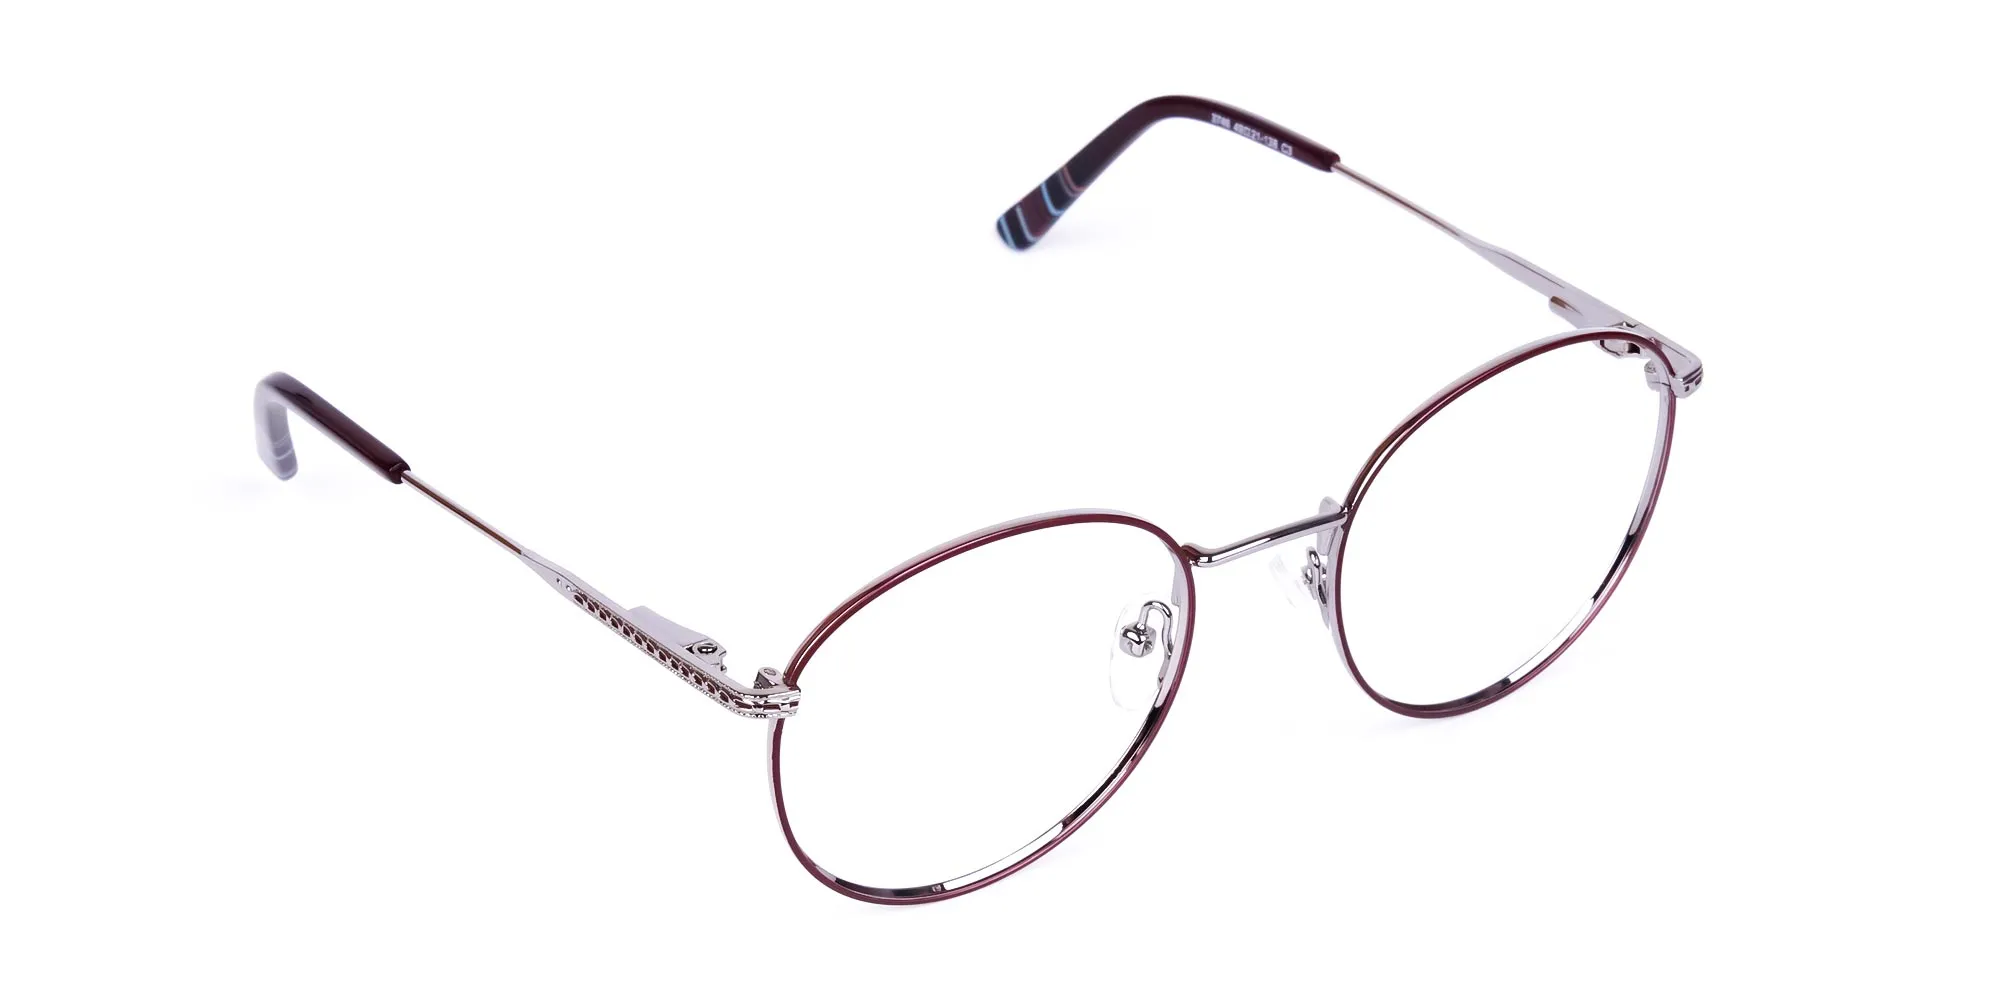 BRISTOL 3 - Burgundy & Silver Round Glasses Frames | Specscart.®